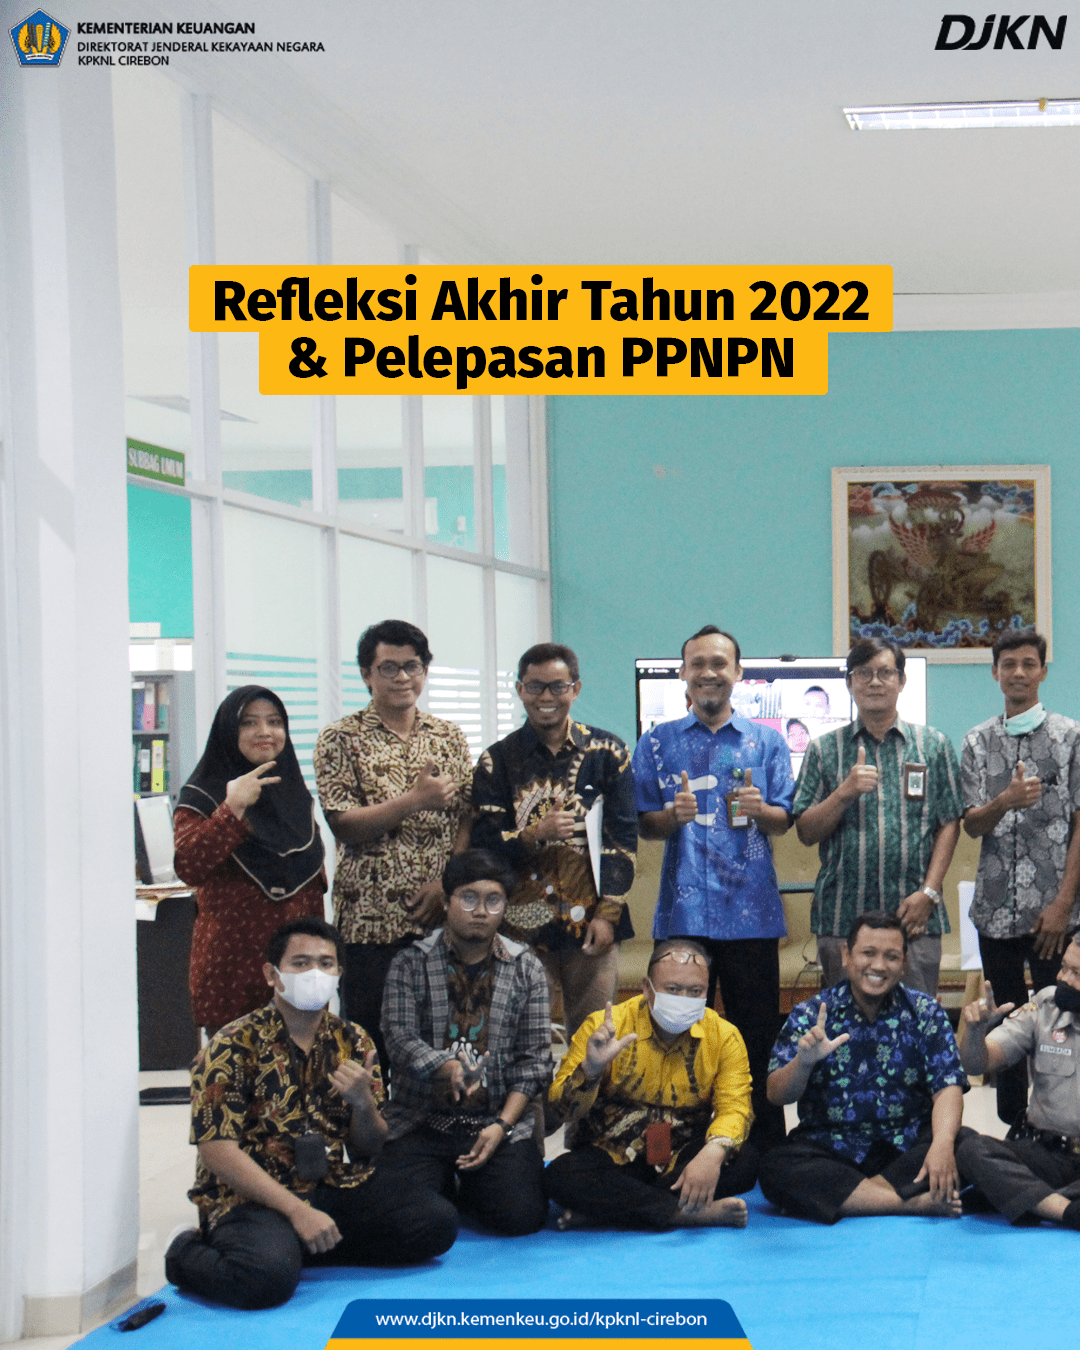 KPKNL Cirebon Gelar Refleksi Akhir Tahun 2022, Menyambut Tahun 2023